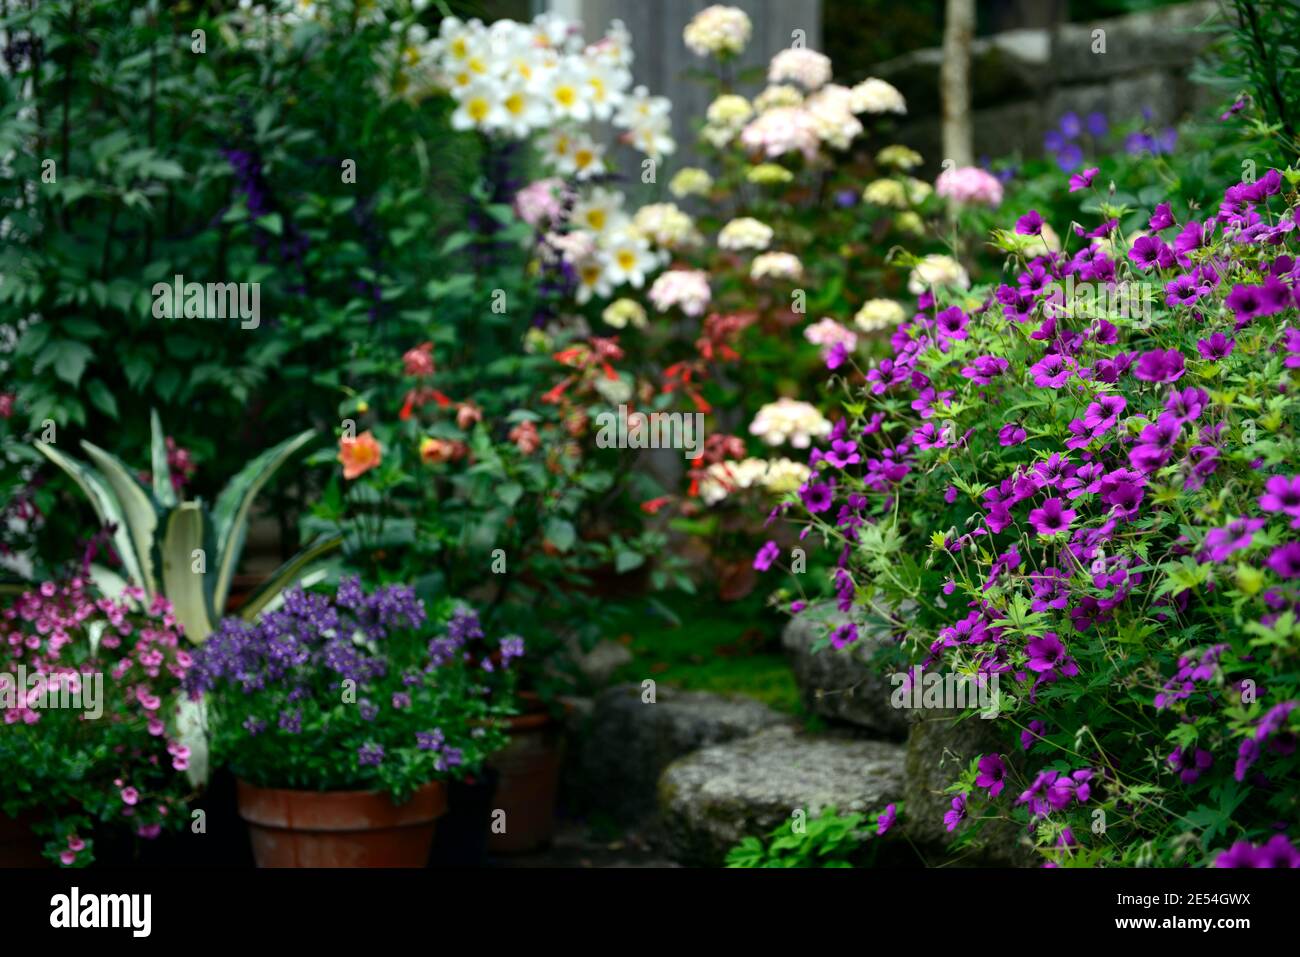 geranium anne thomson,Hydrangea preziosa,lilium regale,lily regale,agave mediopicta aurea,hydrangeas and lilies,pink white flowers,flowering combinati Stock Photo